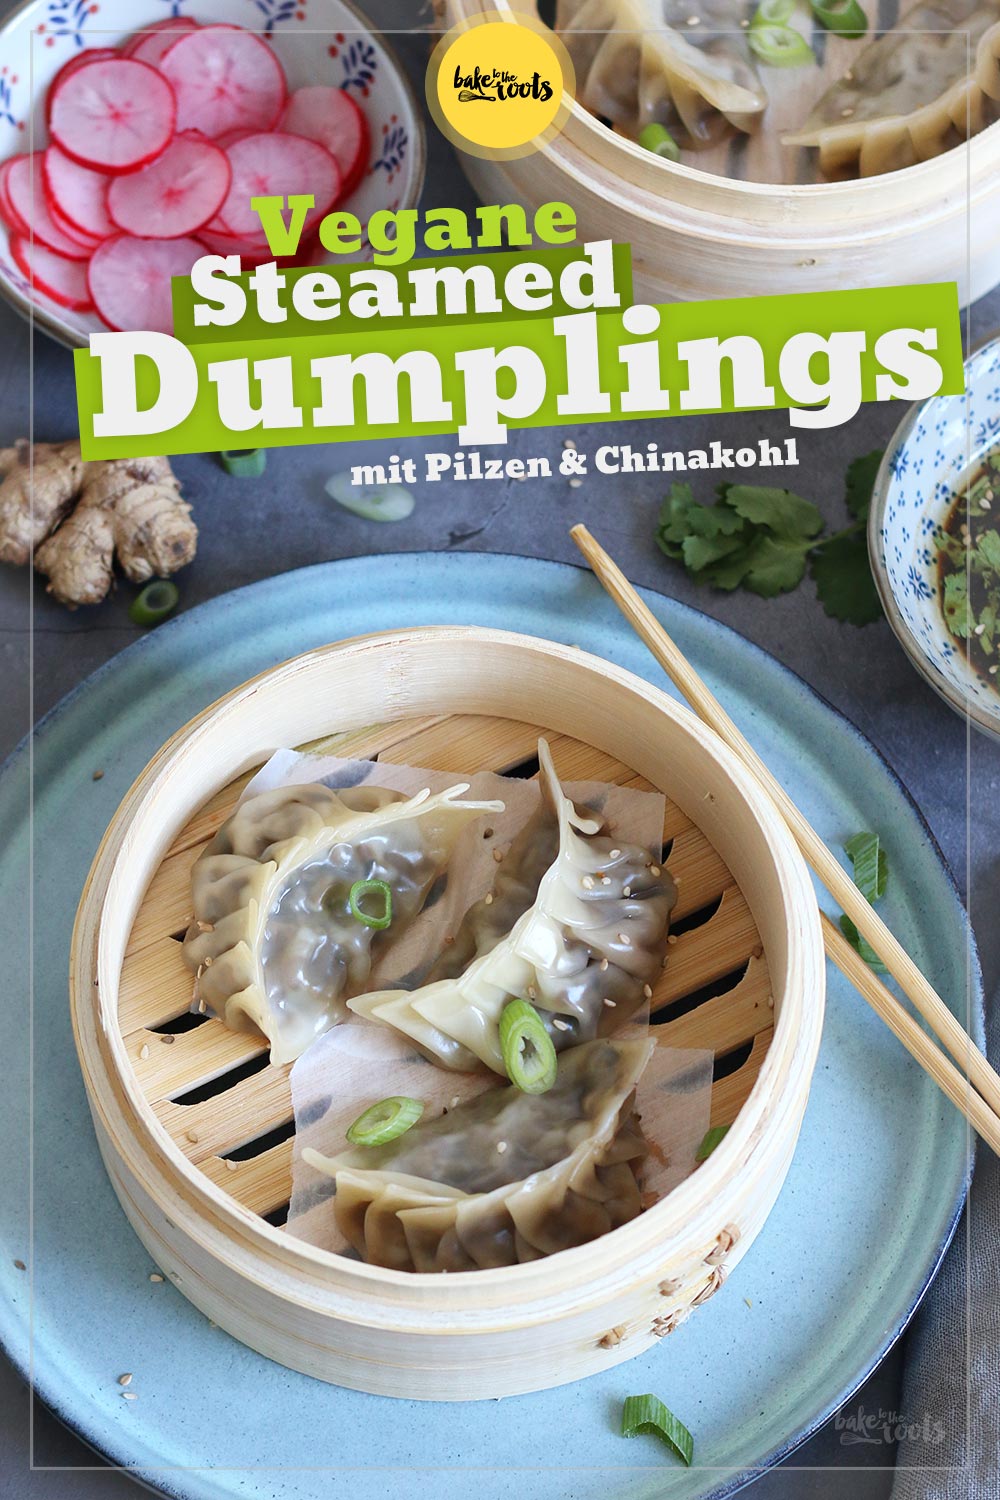 Gedämpfte vegane Dumplings mit Pilzen & Chinakohl | Bake to the roots